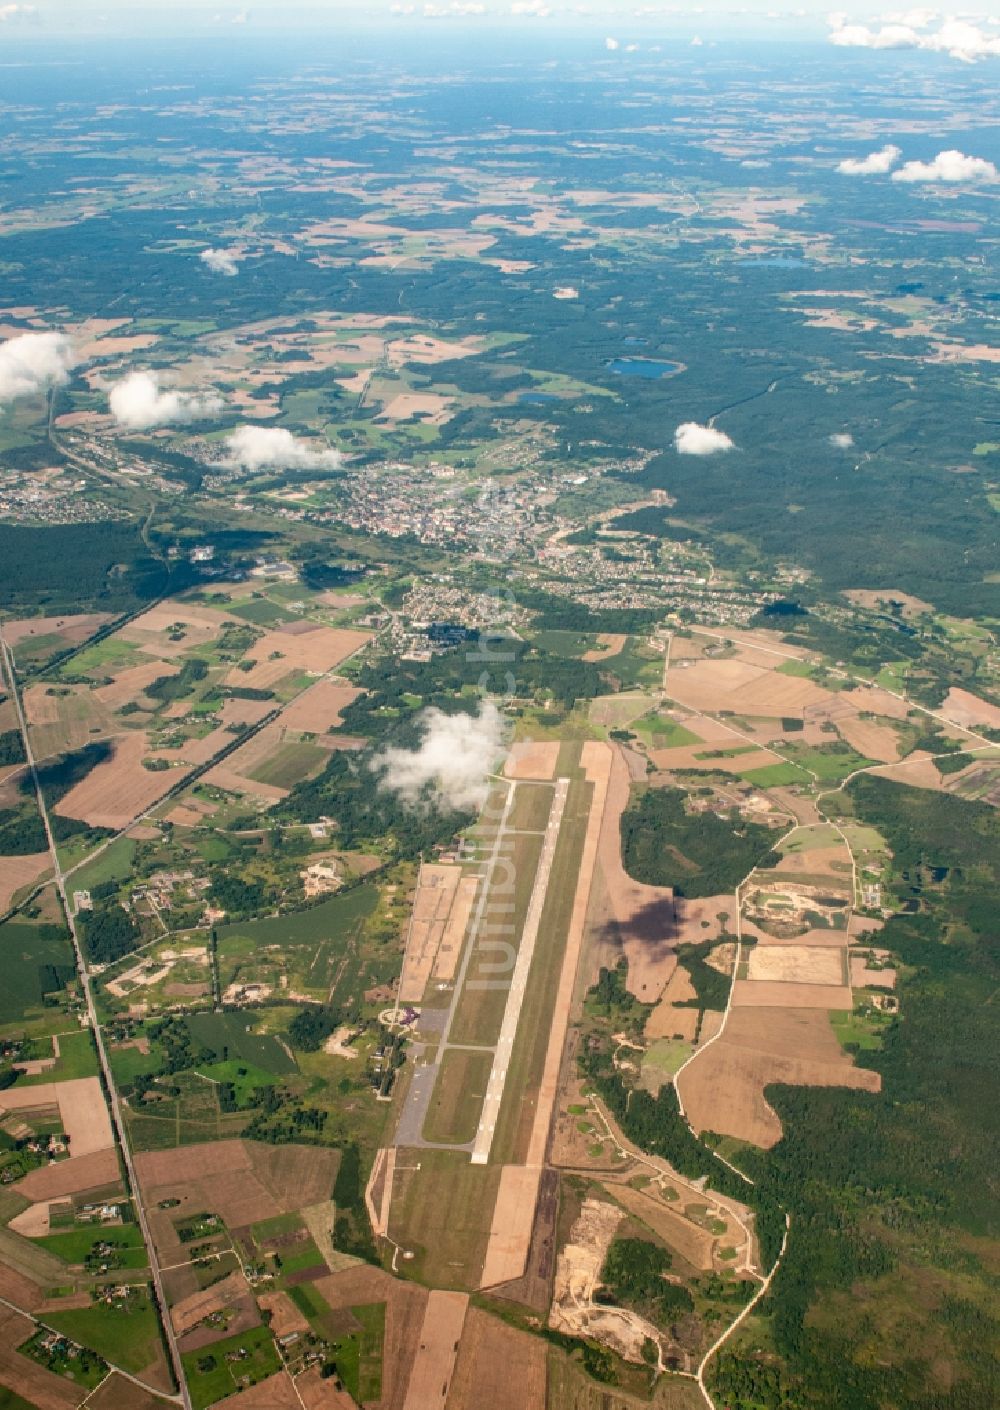 Luftbild Zvirbuli - Flugplatz Jurmala in Zvirbuli in Bezirk Engure, Lettland